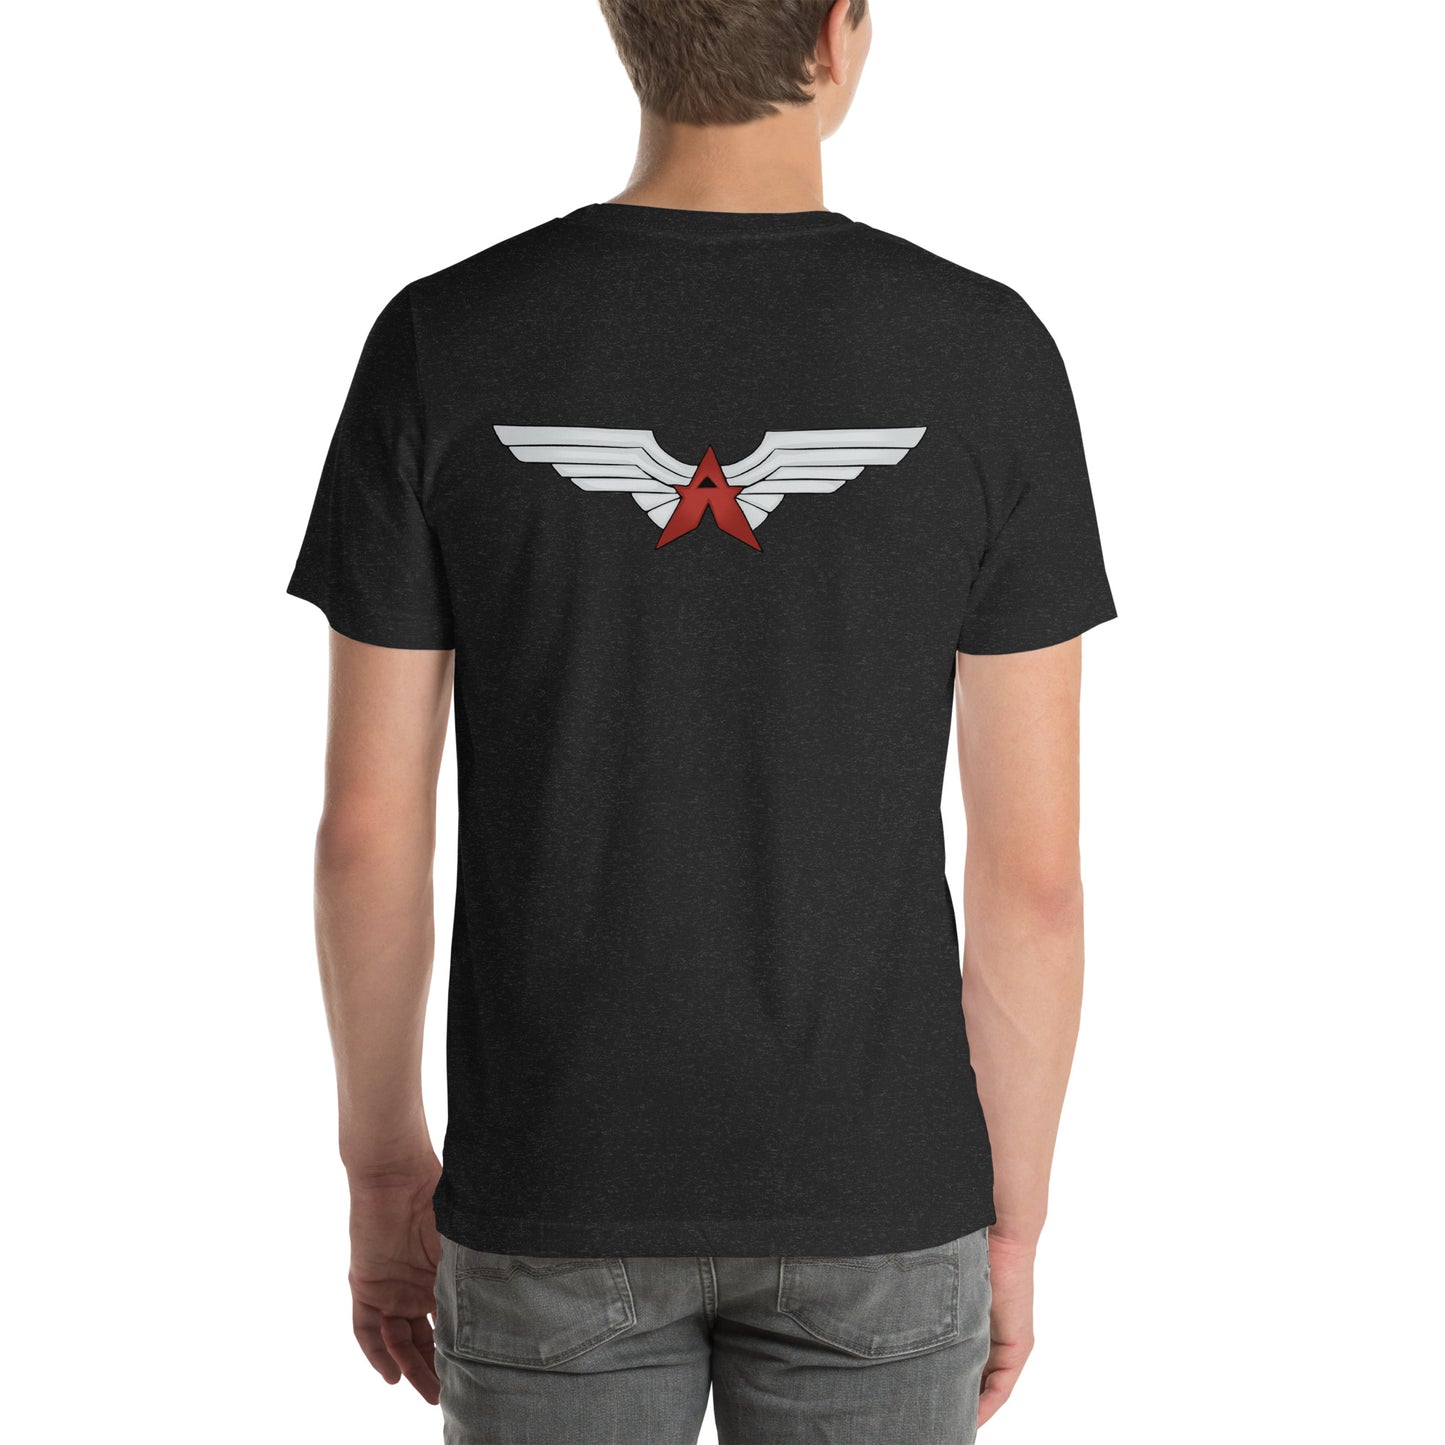 NAT the MERC: Do you feel lucky Punk? + Wings logo on back. Unisex t-shirt.